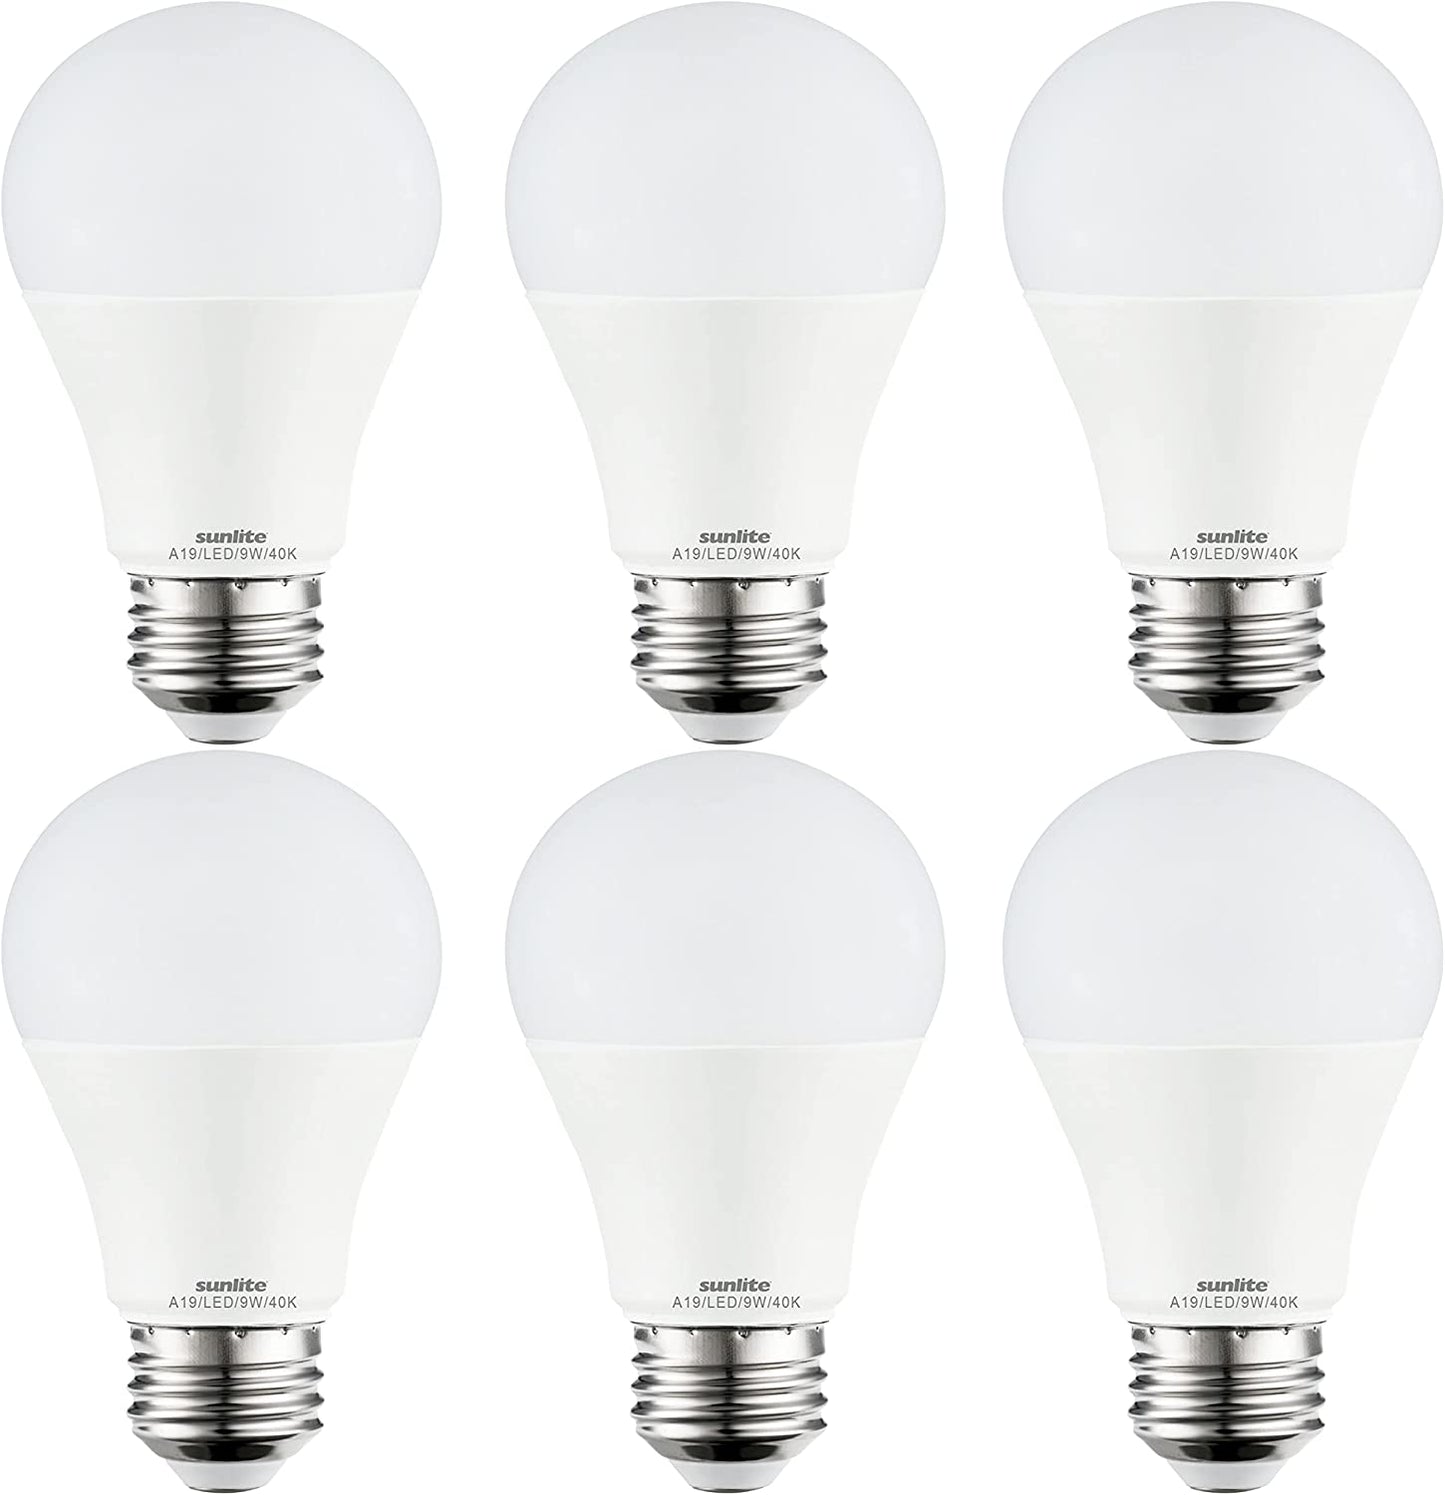 Sunlite 80794 LED A19 Standard Household Light Bulb, 9 Watts (60W Equivalent), 800 Lumens, Medium Base (E26), Dimmable, UL Listed, Energy Star, 90 CRI, Title 20, 4000K Cool White, 6 Count